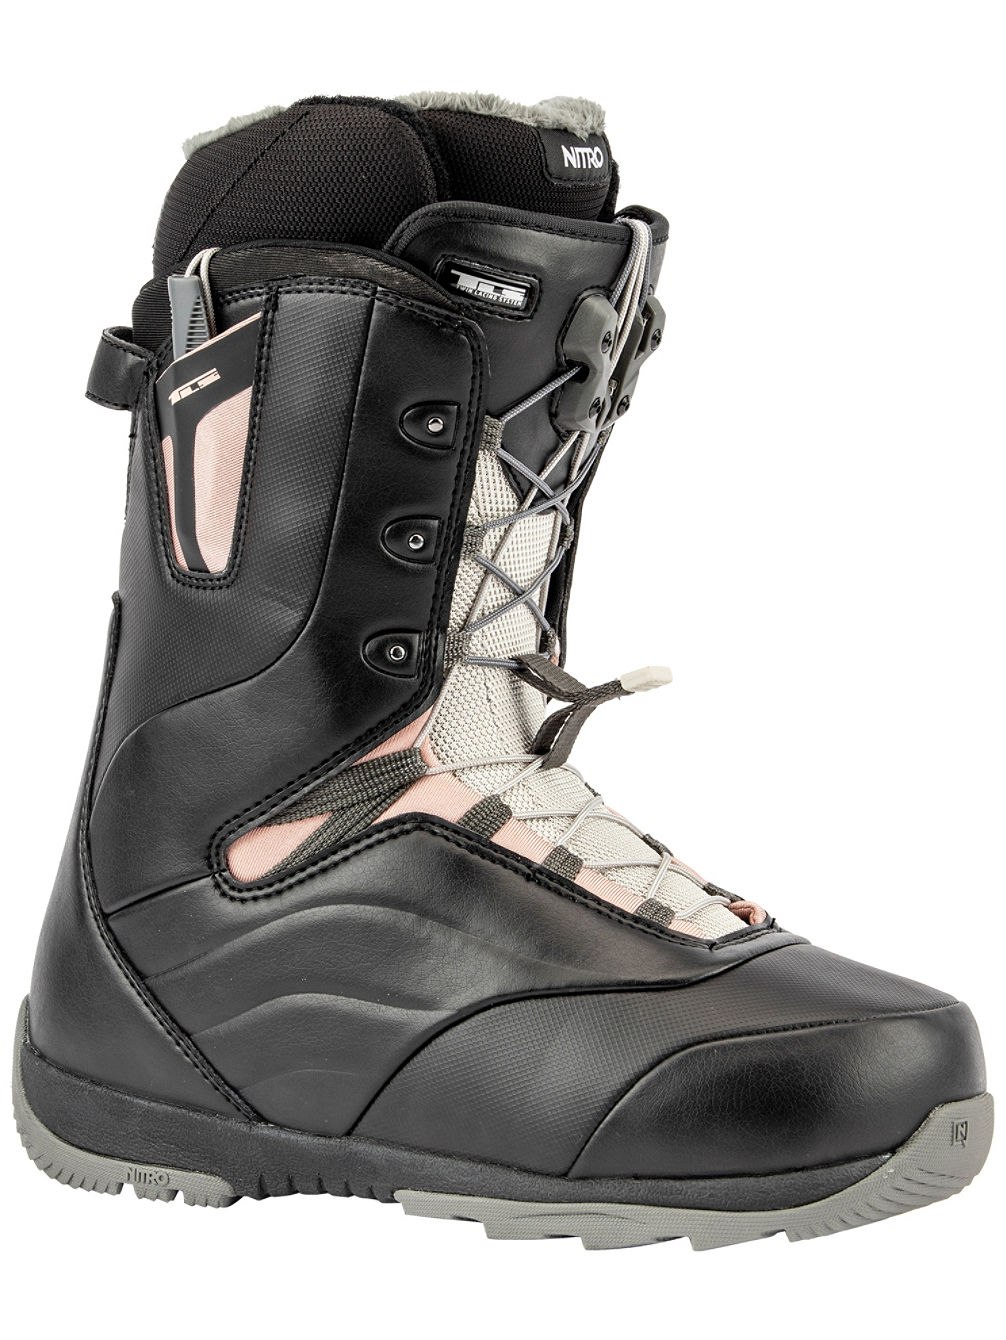 Crown TLS Snowboard-Boots